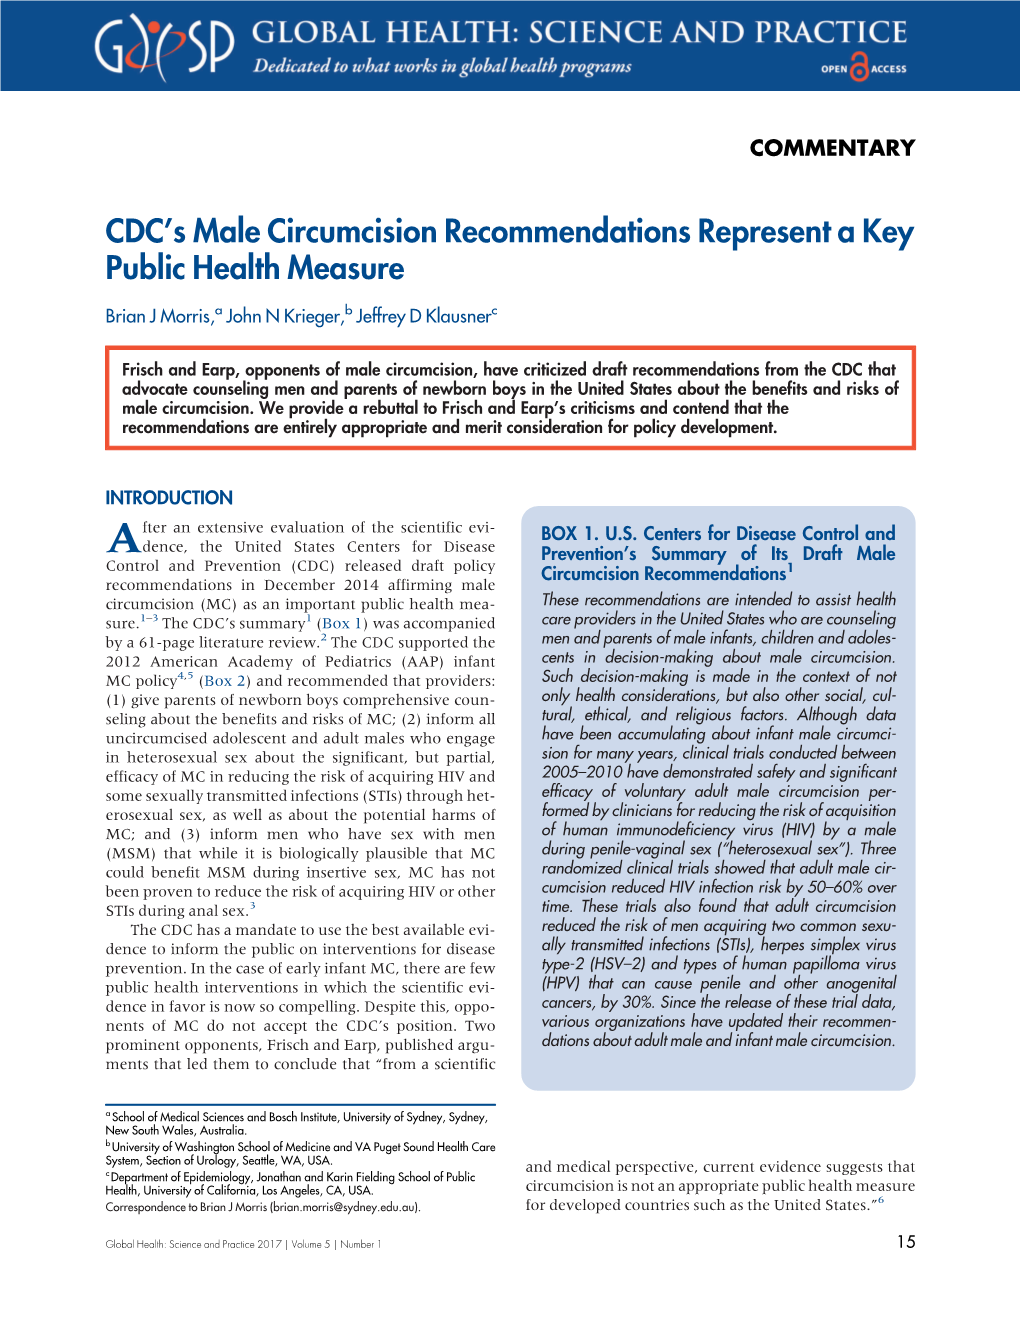 CDC's Male Circumcision Recommendations Represent A